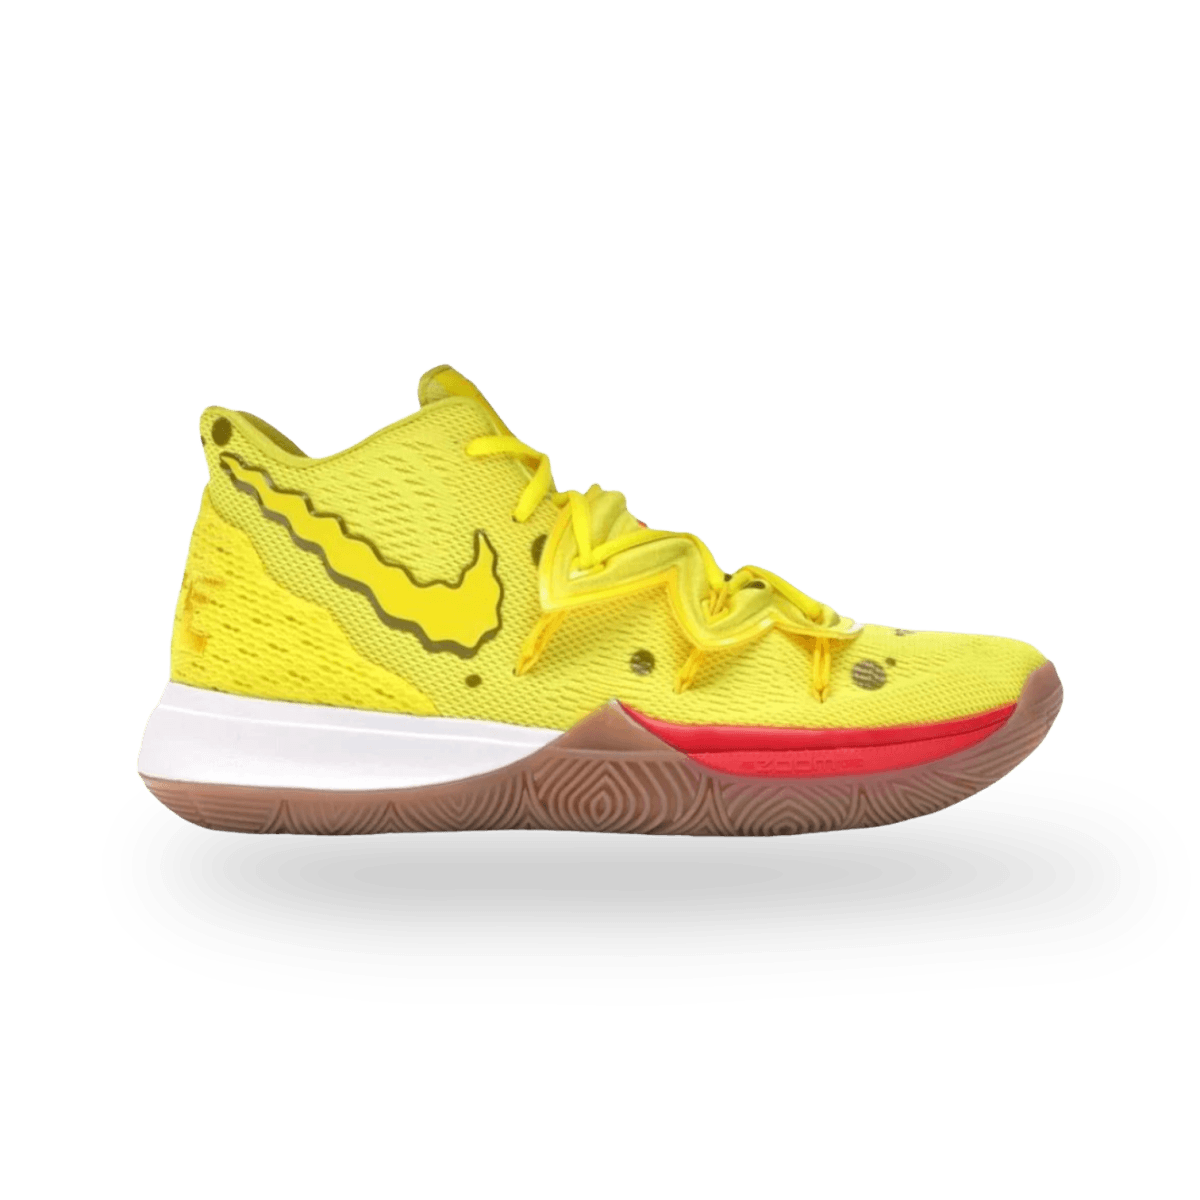 Kyrie 5 Spongebob Squarepants - Mid Sneaker - Jawns on Fire Sneakers & Streetwear